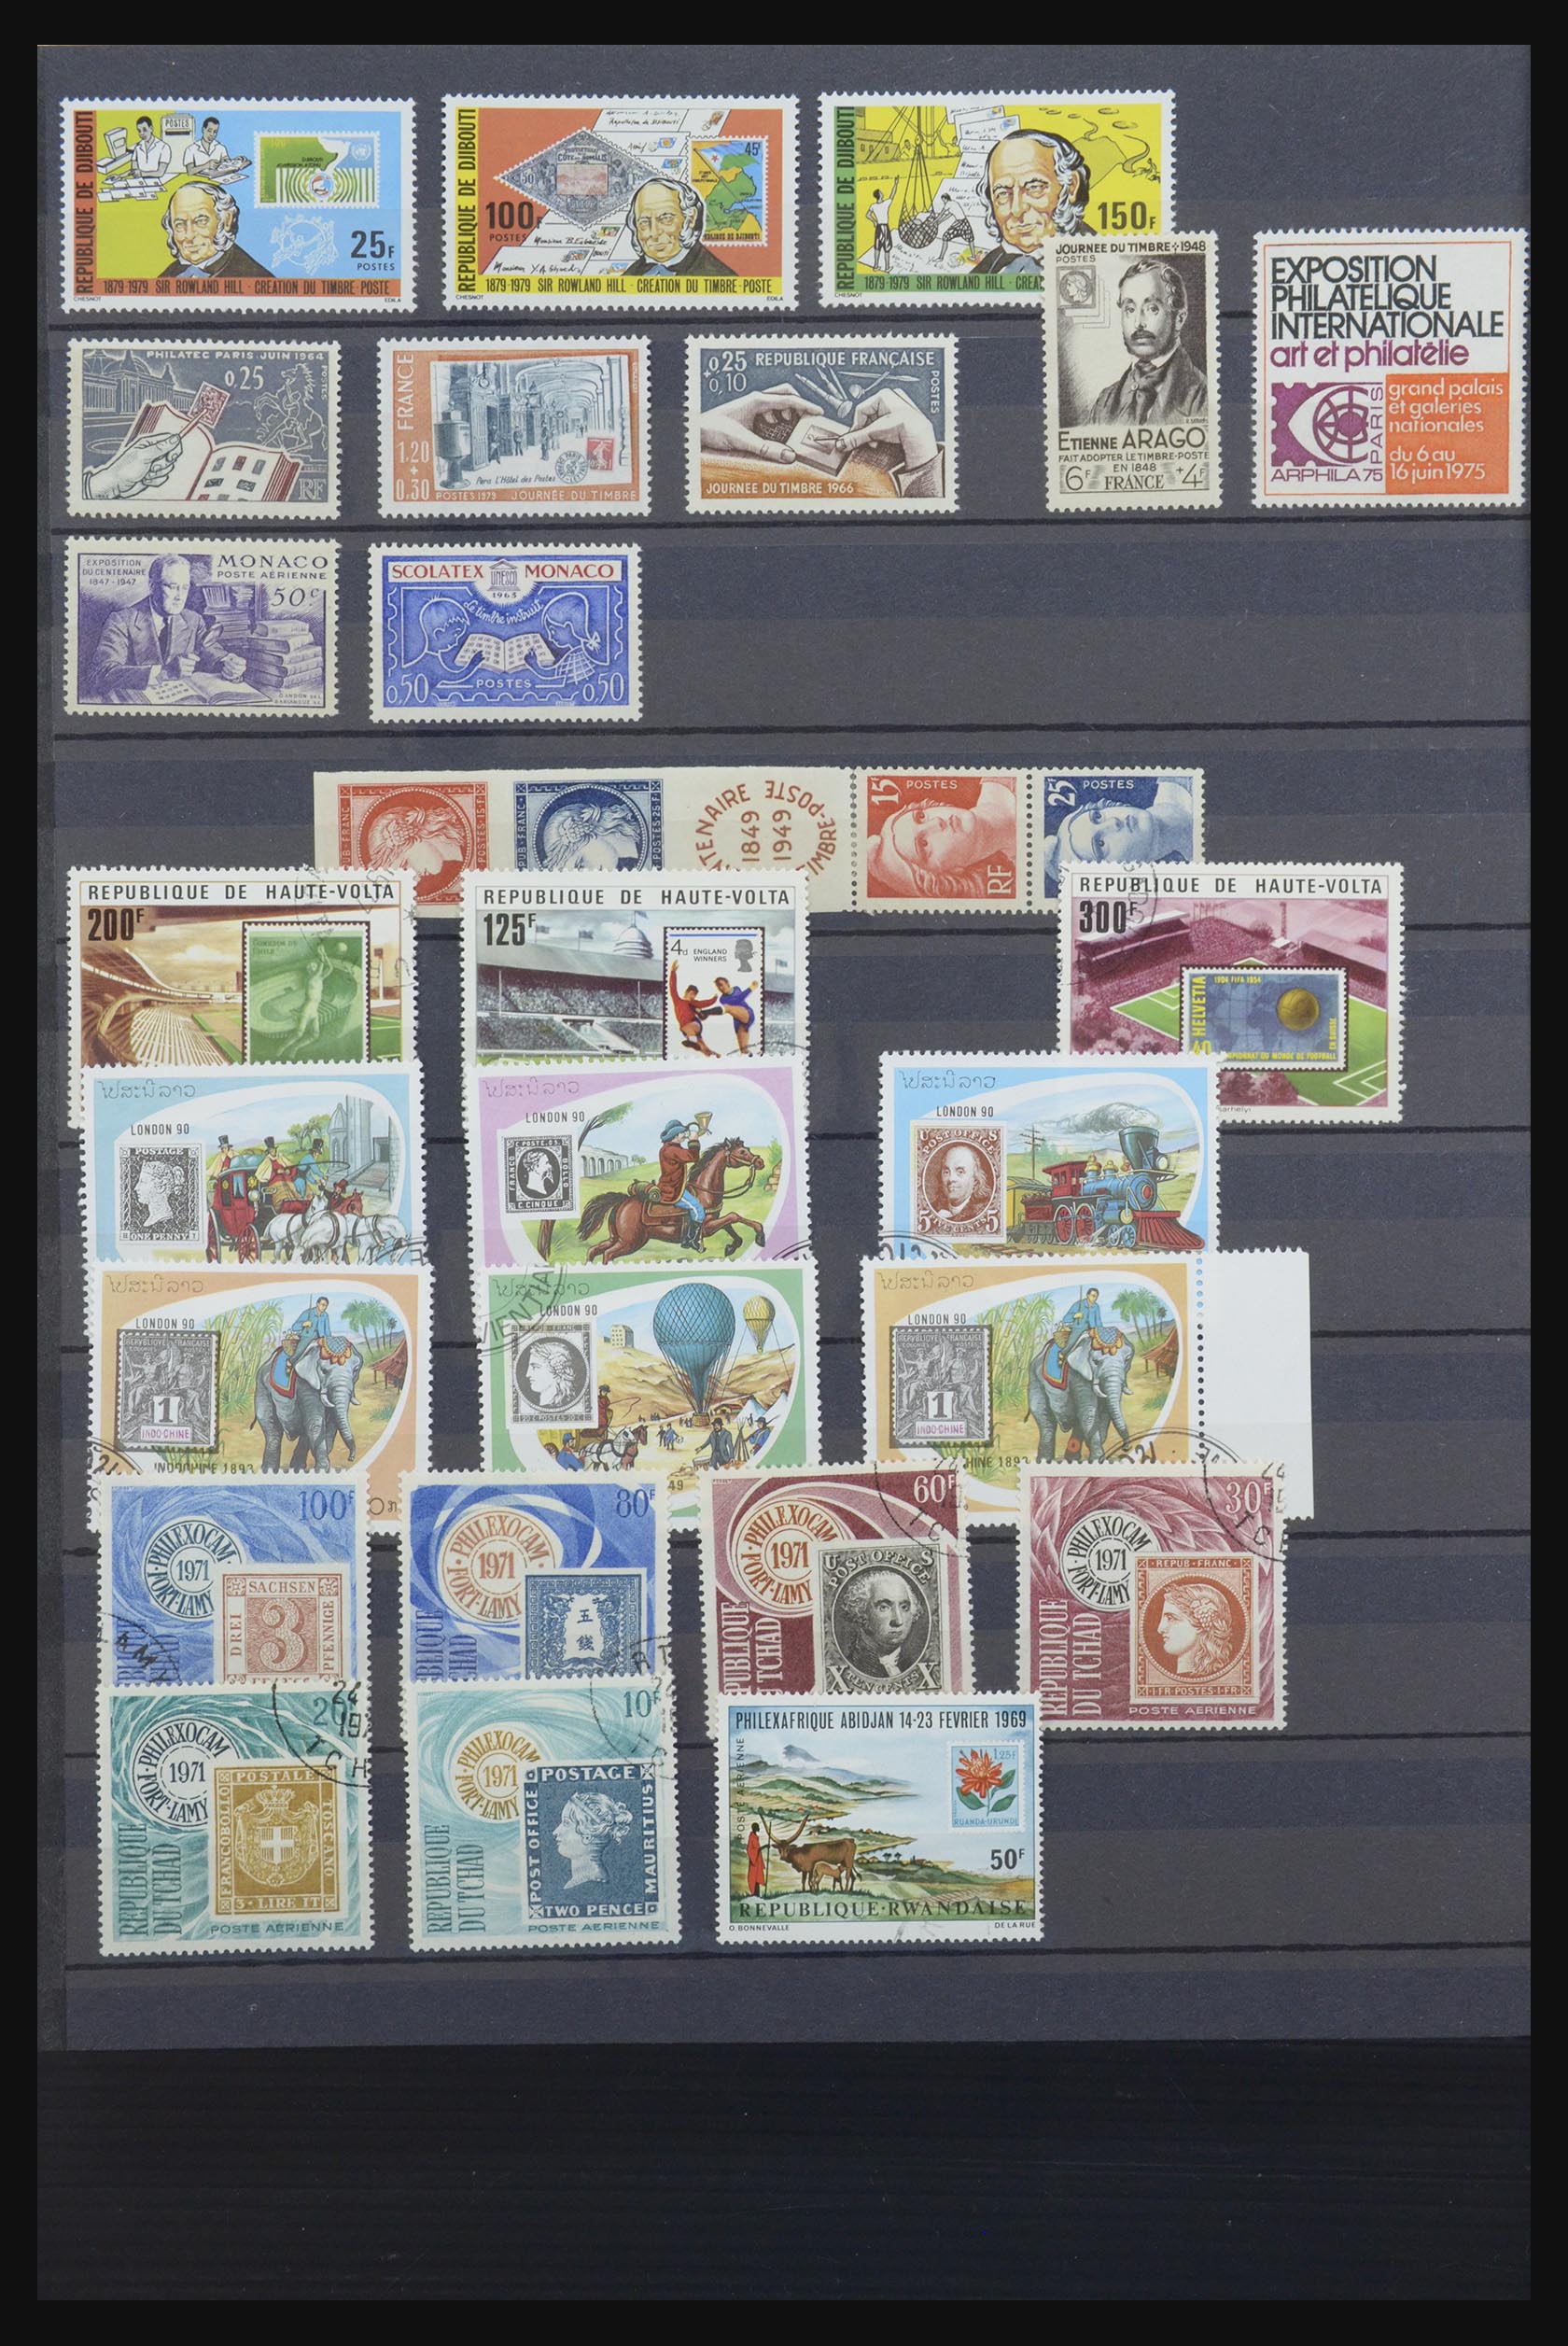 31652 078 - 31652 Motief: postzegel op postzegel 1940-1993.